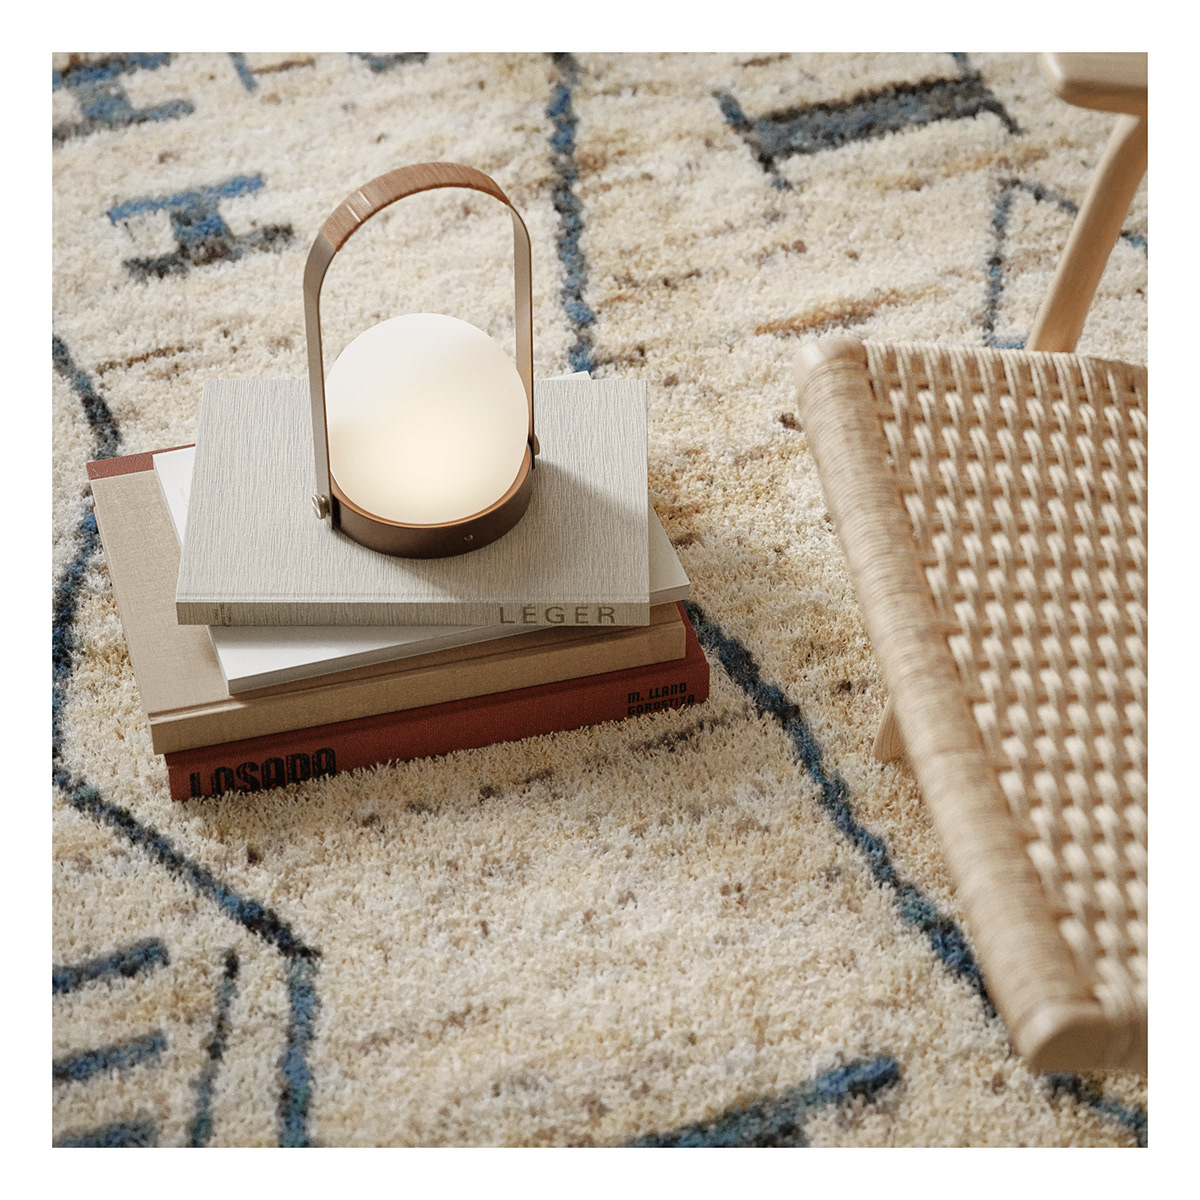 Carpet textures